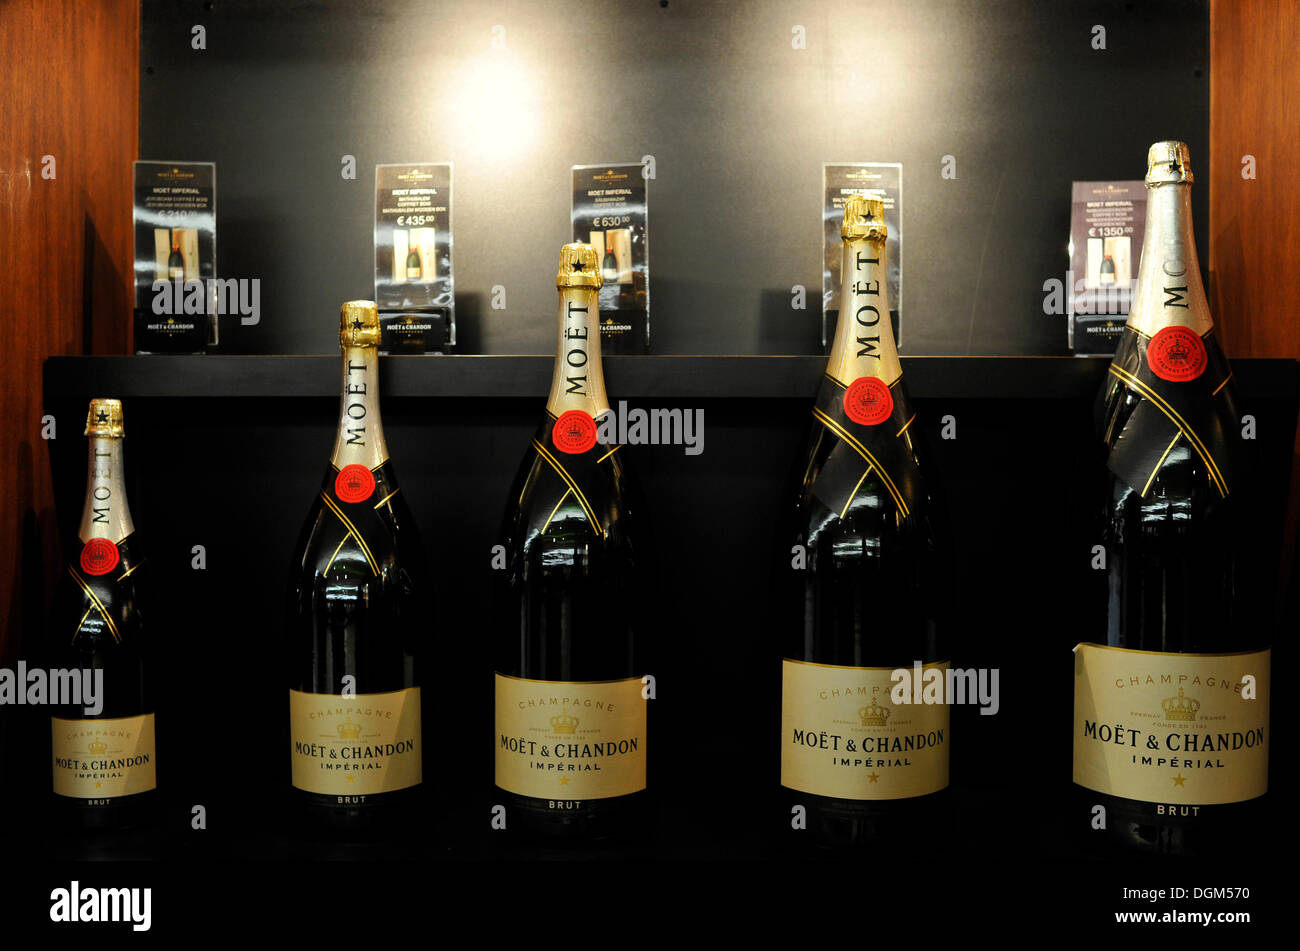 Le bottiglie di champagne in varie dimensioni, Imperiale, Moet et Chandon cantina, LVMH beni di lusso gruppo Louis Vuitton Moet Hennessy Foto Stock